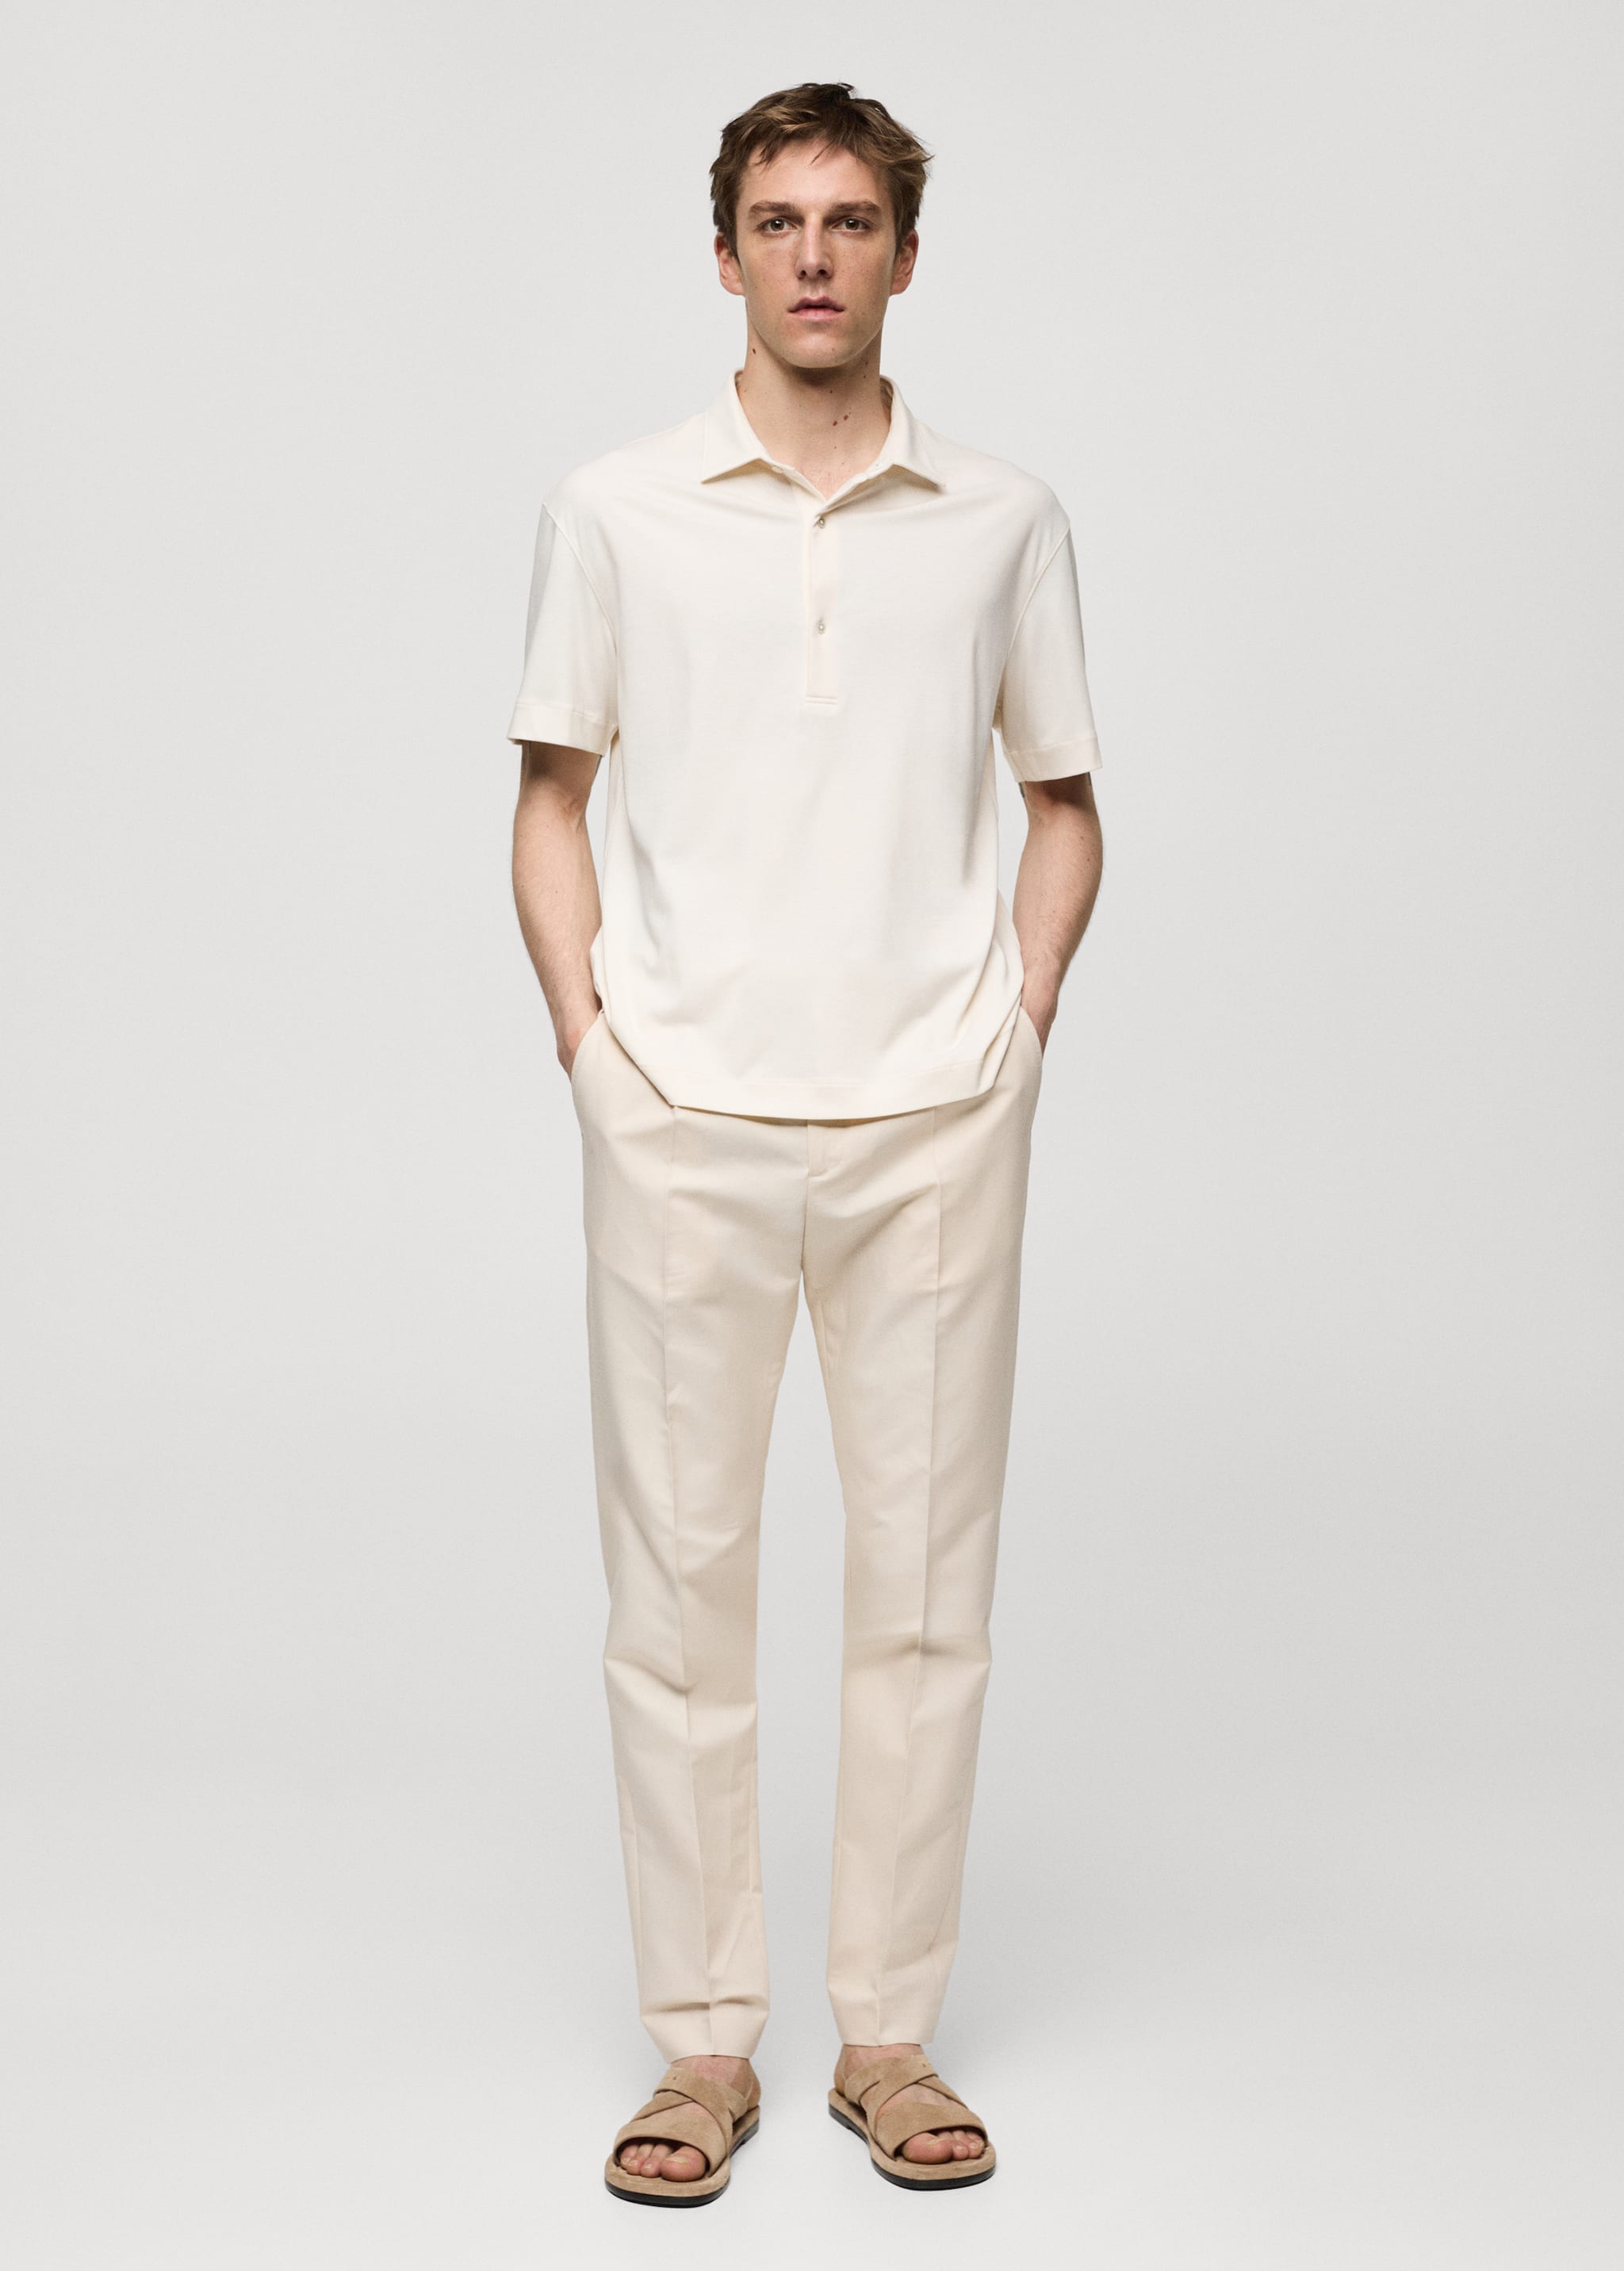 100% cotton slim-fit polo shirt - General plane